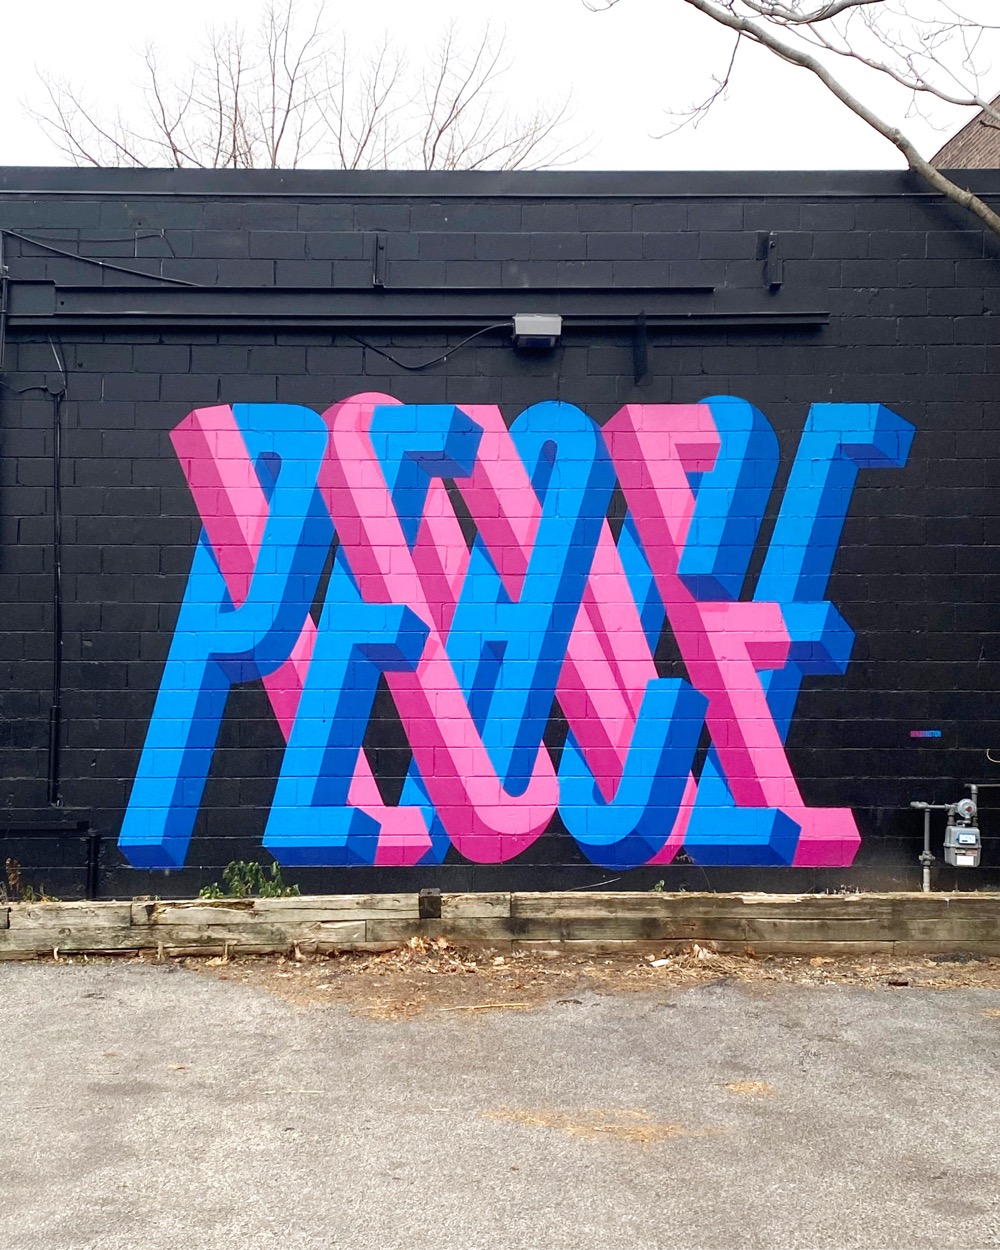 Peace + love mural